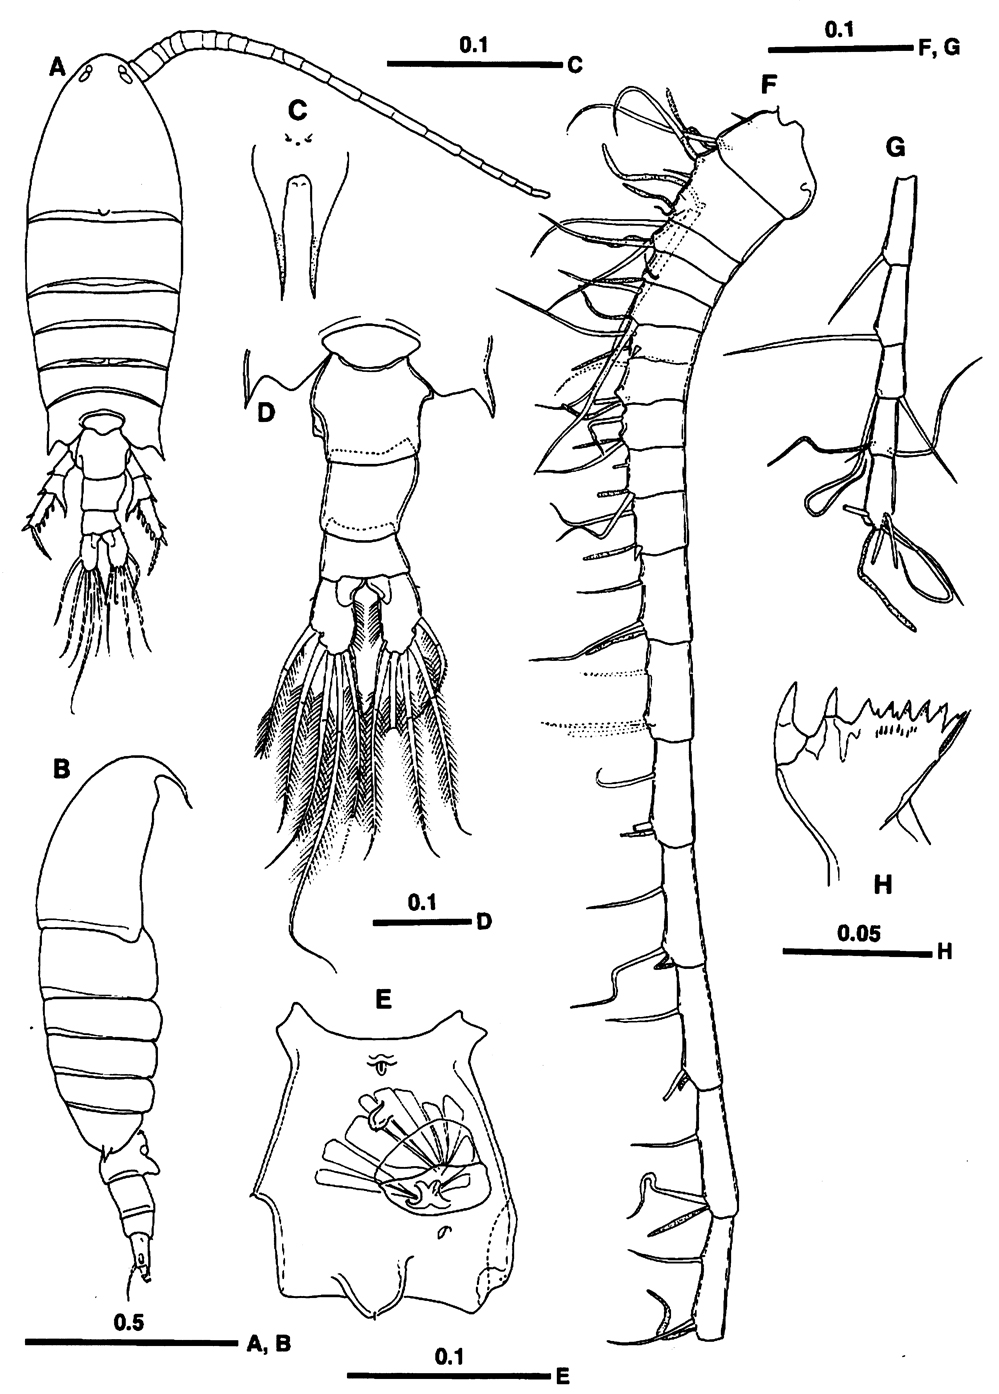 Species Centropages maigo - Plate 1 of morphological figures